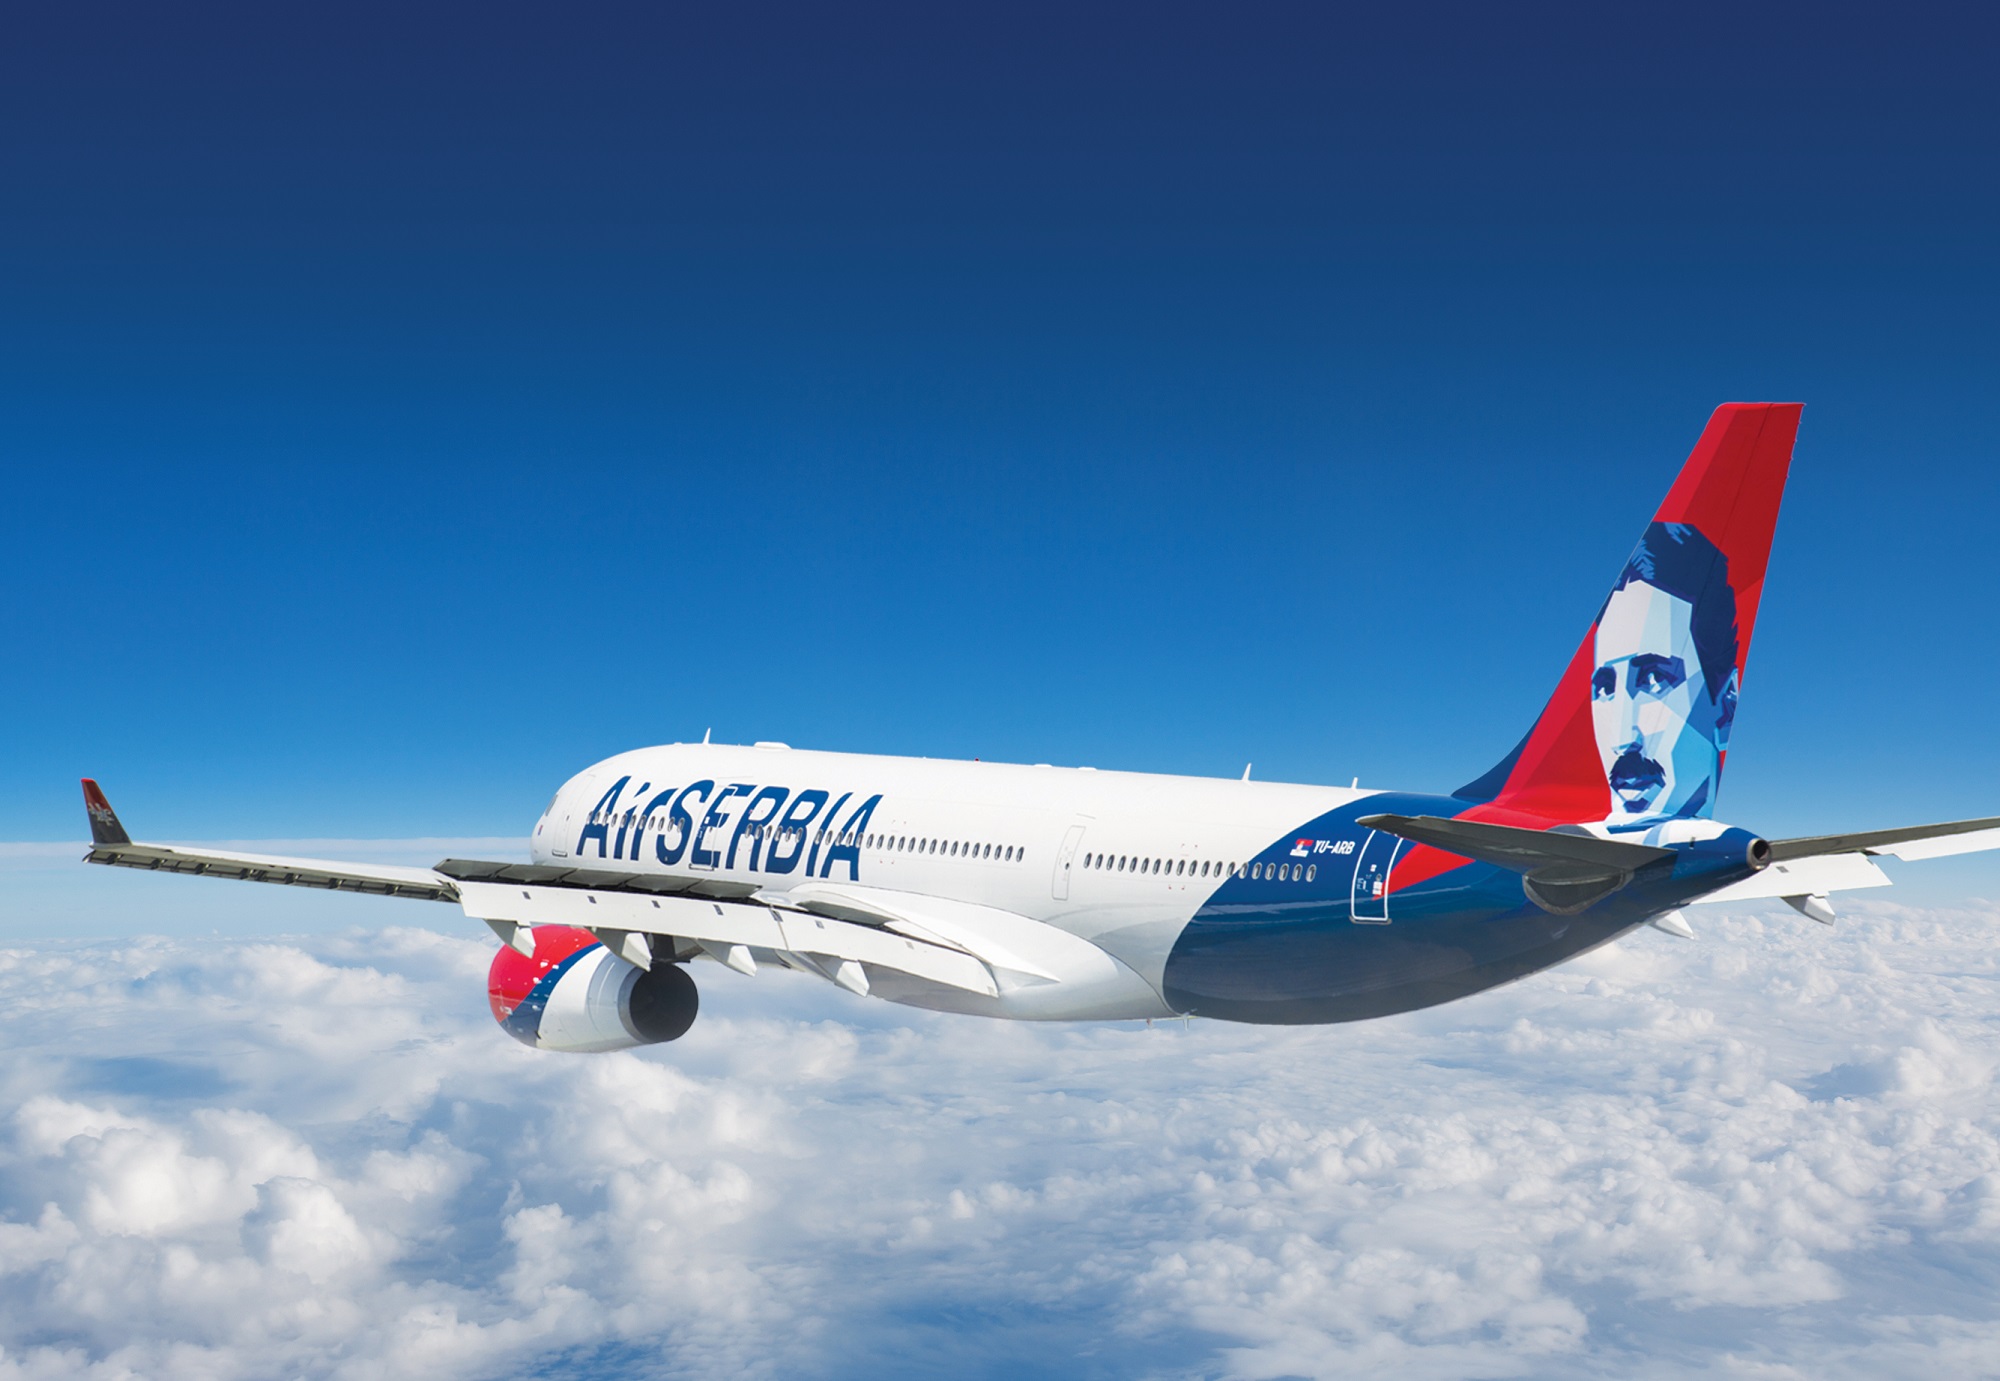 Czech Airlines Technics podepsala dlouholetý kontrakt s Air Serbia